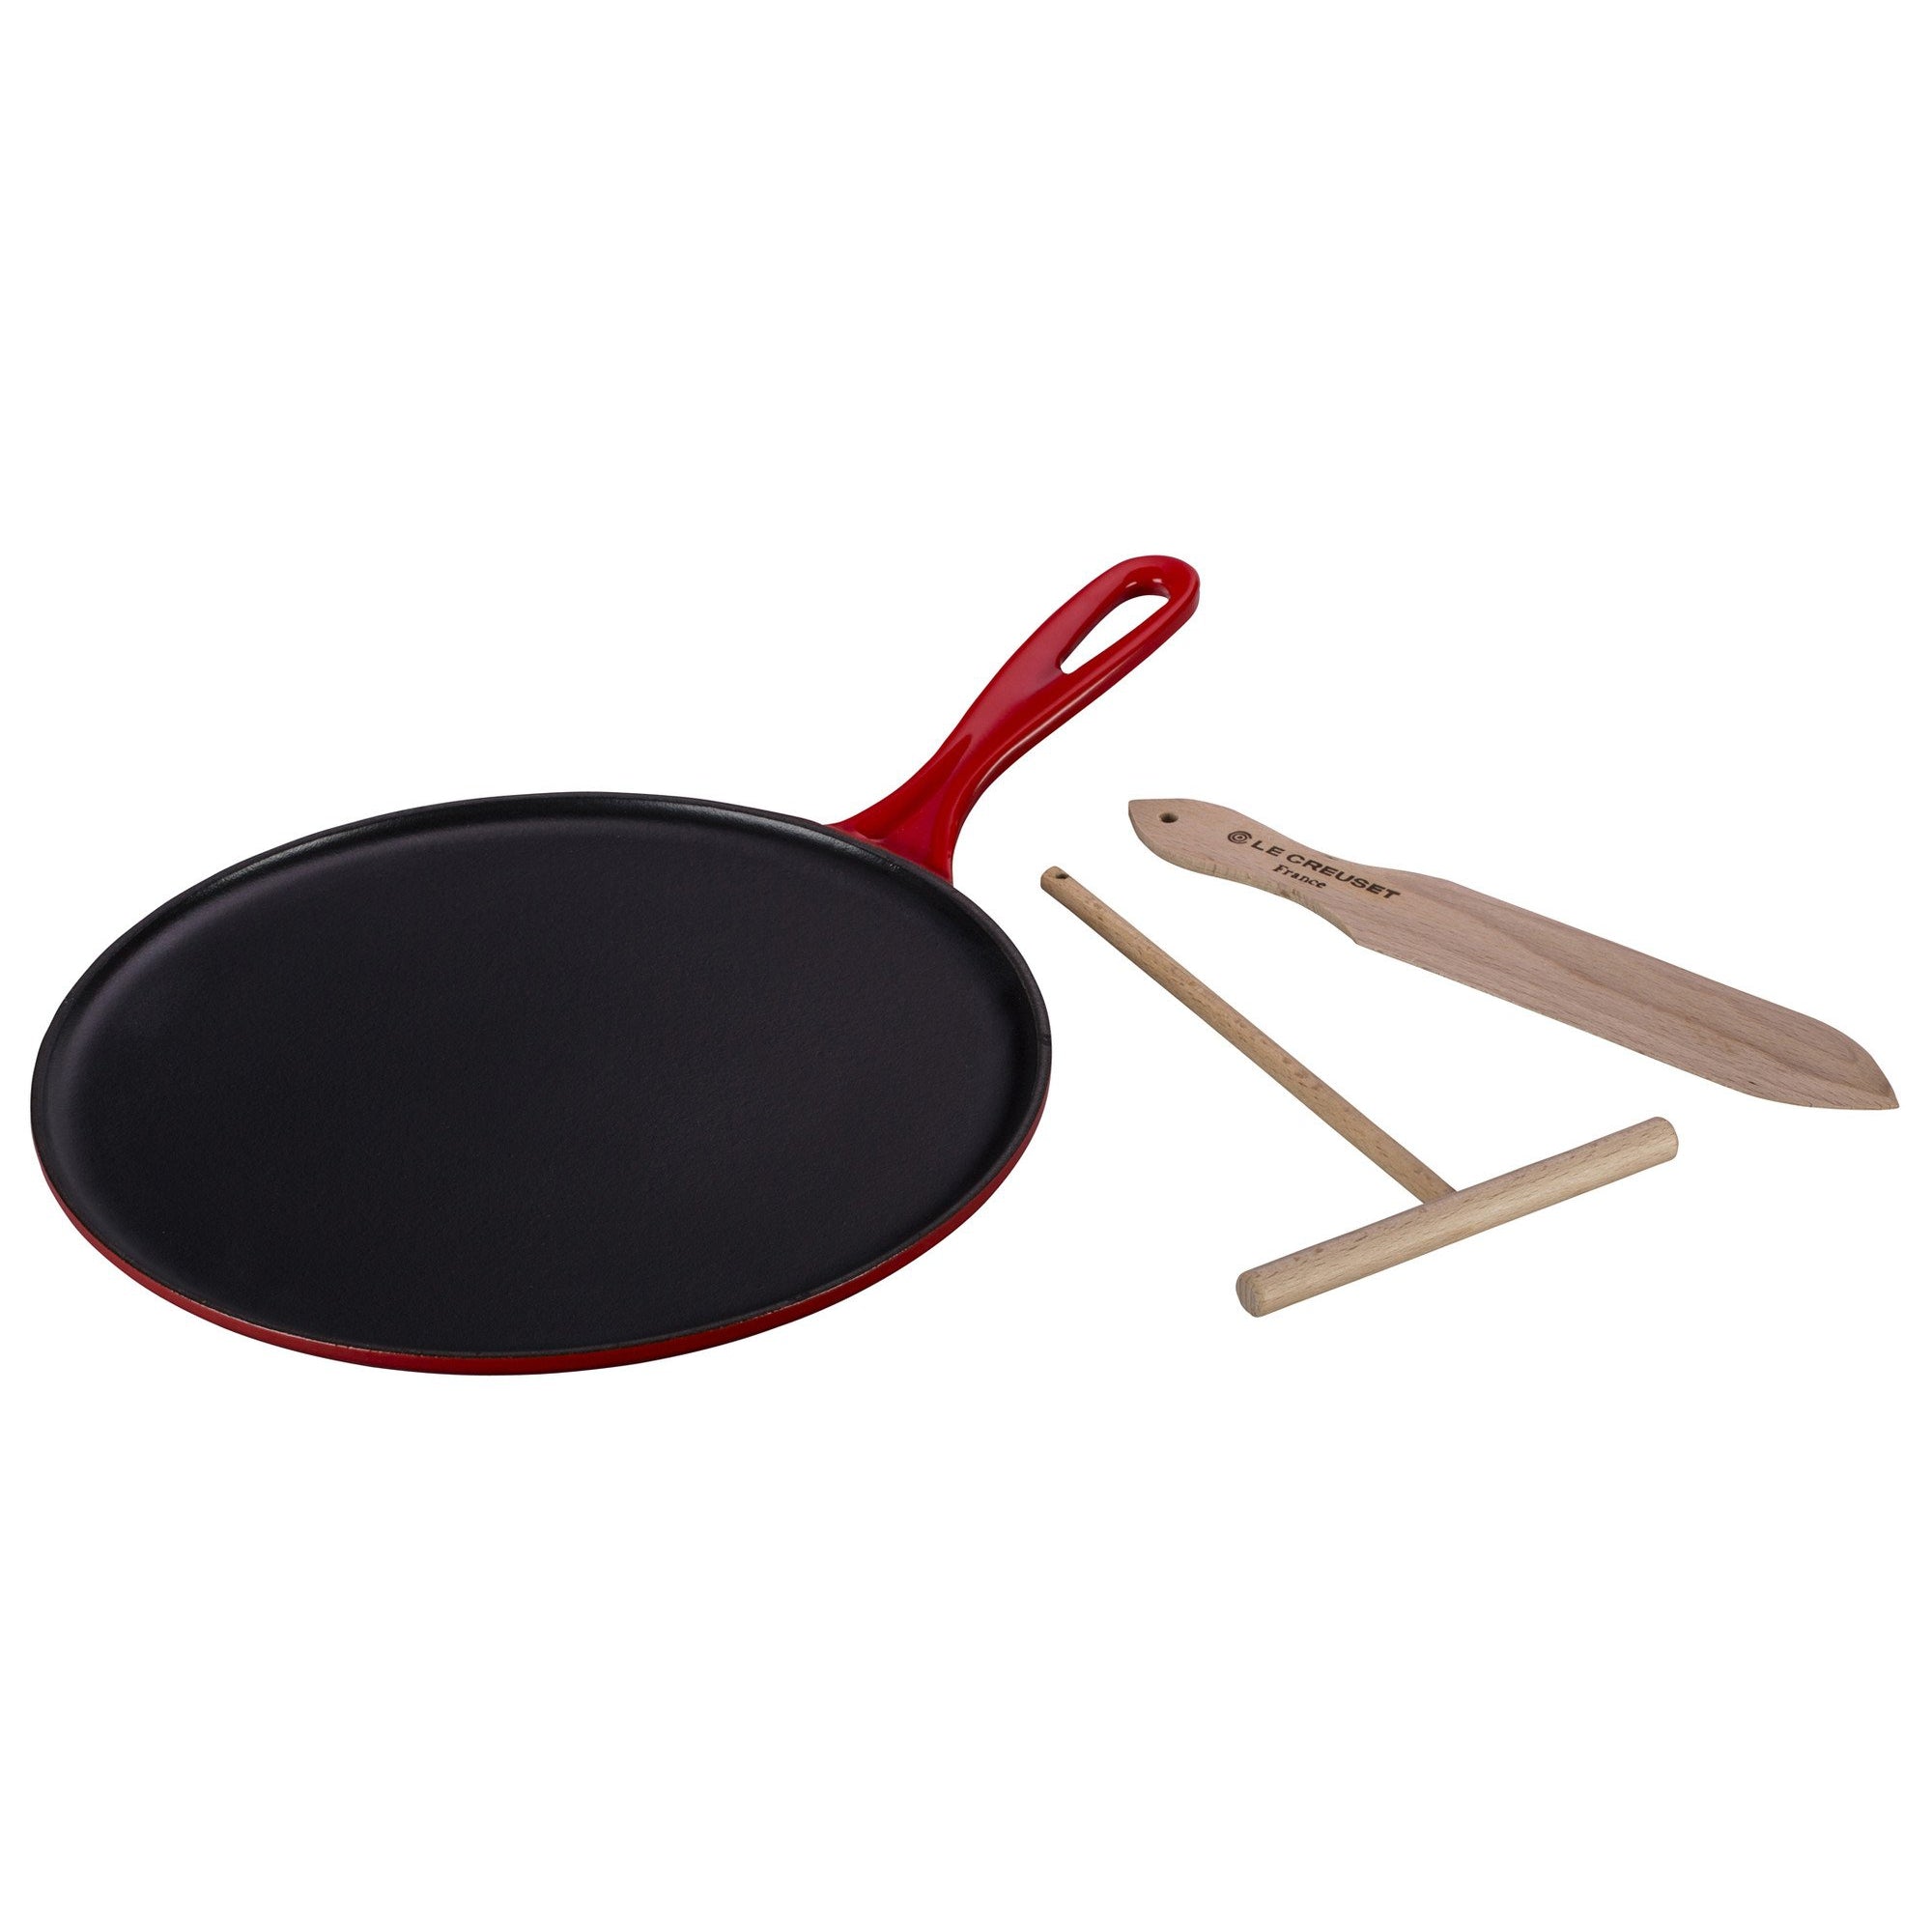 Le Creuset frying pan - 28 cm, 2.6 L red